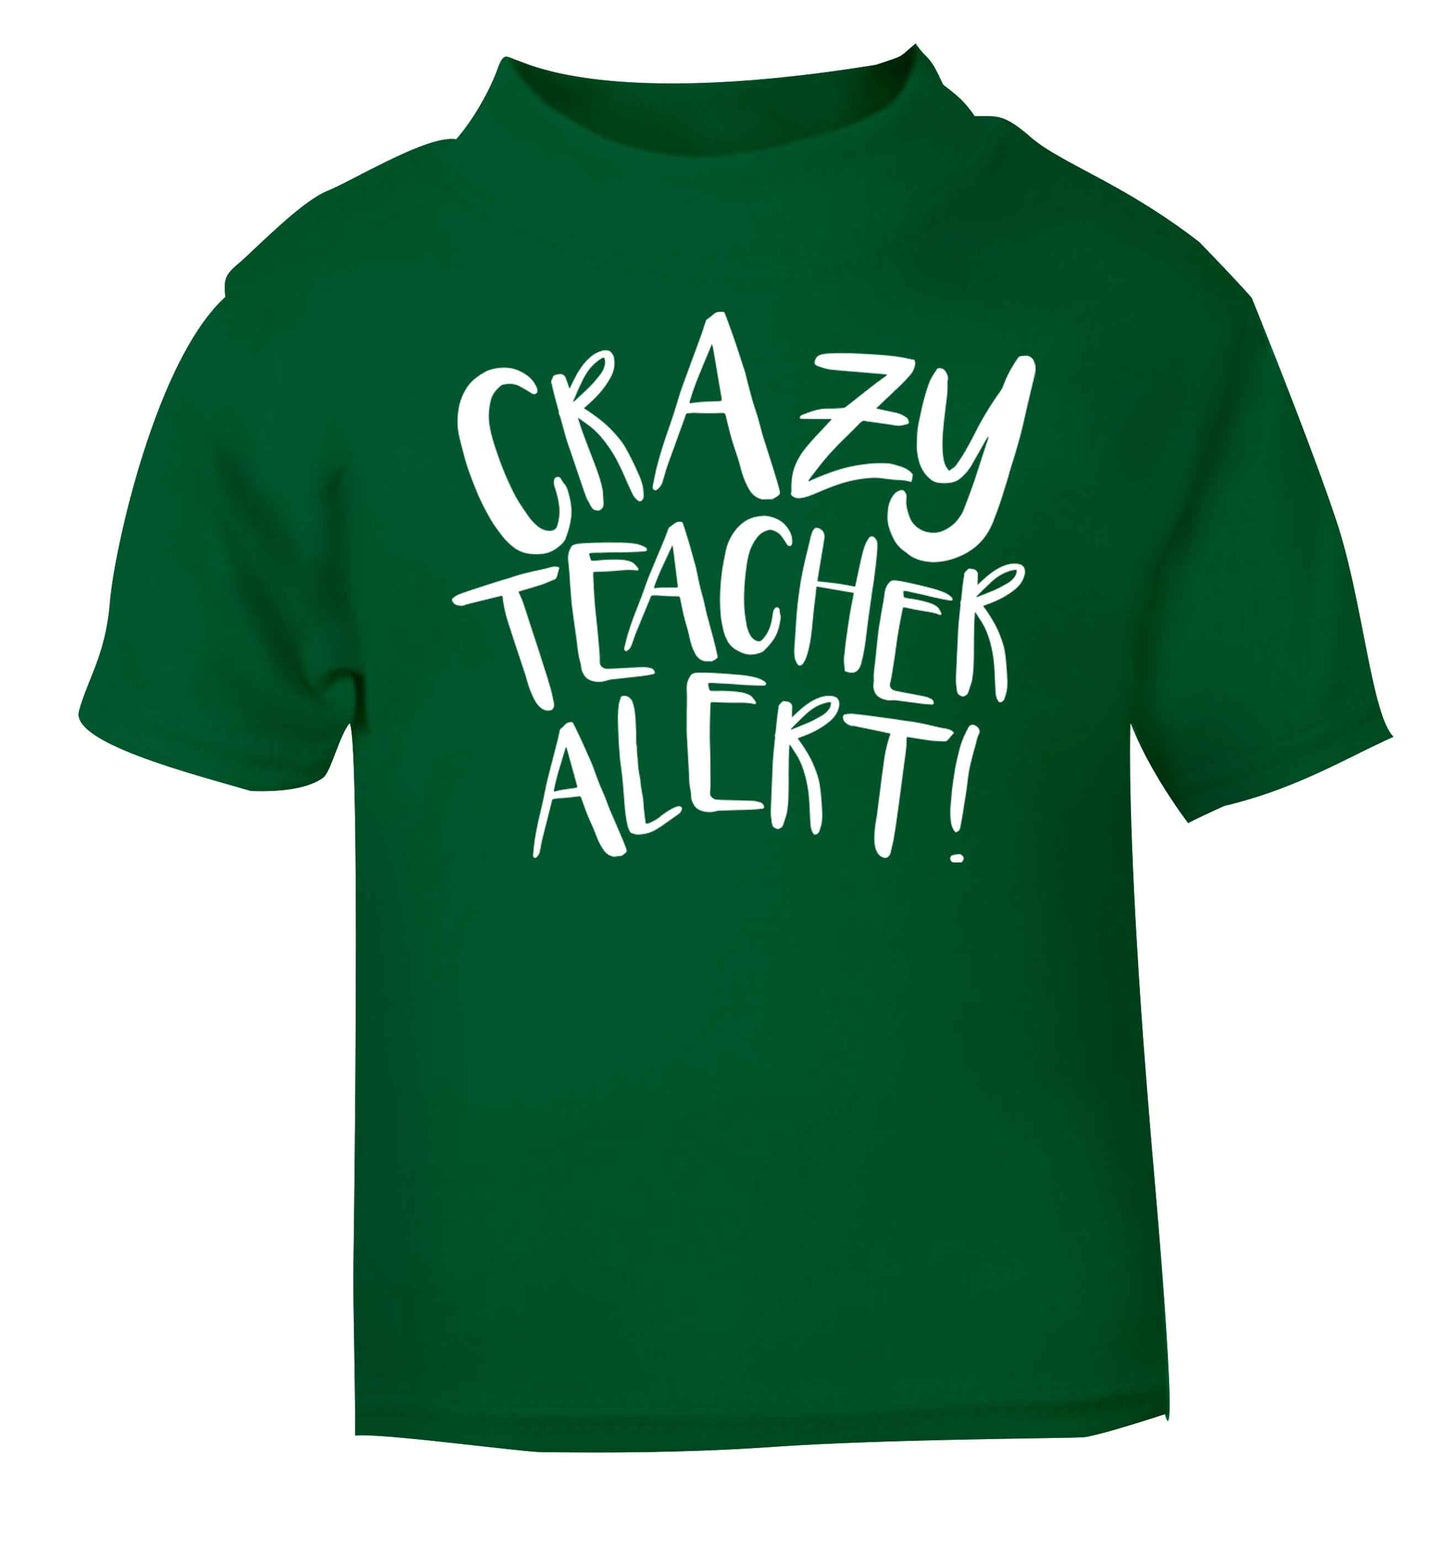 Crazy teacher alert green baby toddler Tshirt 2 Years